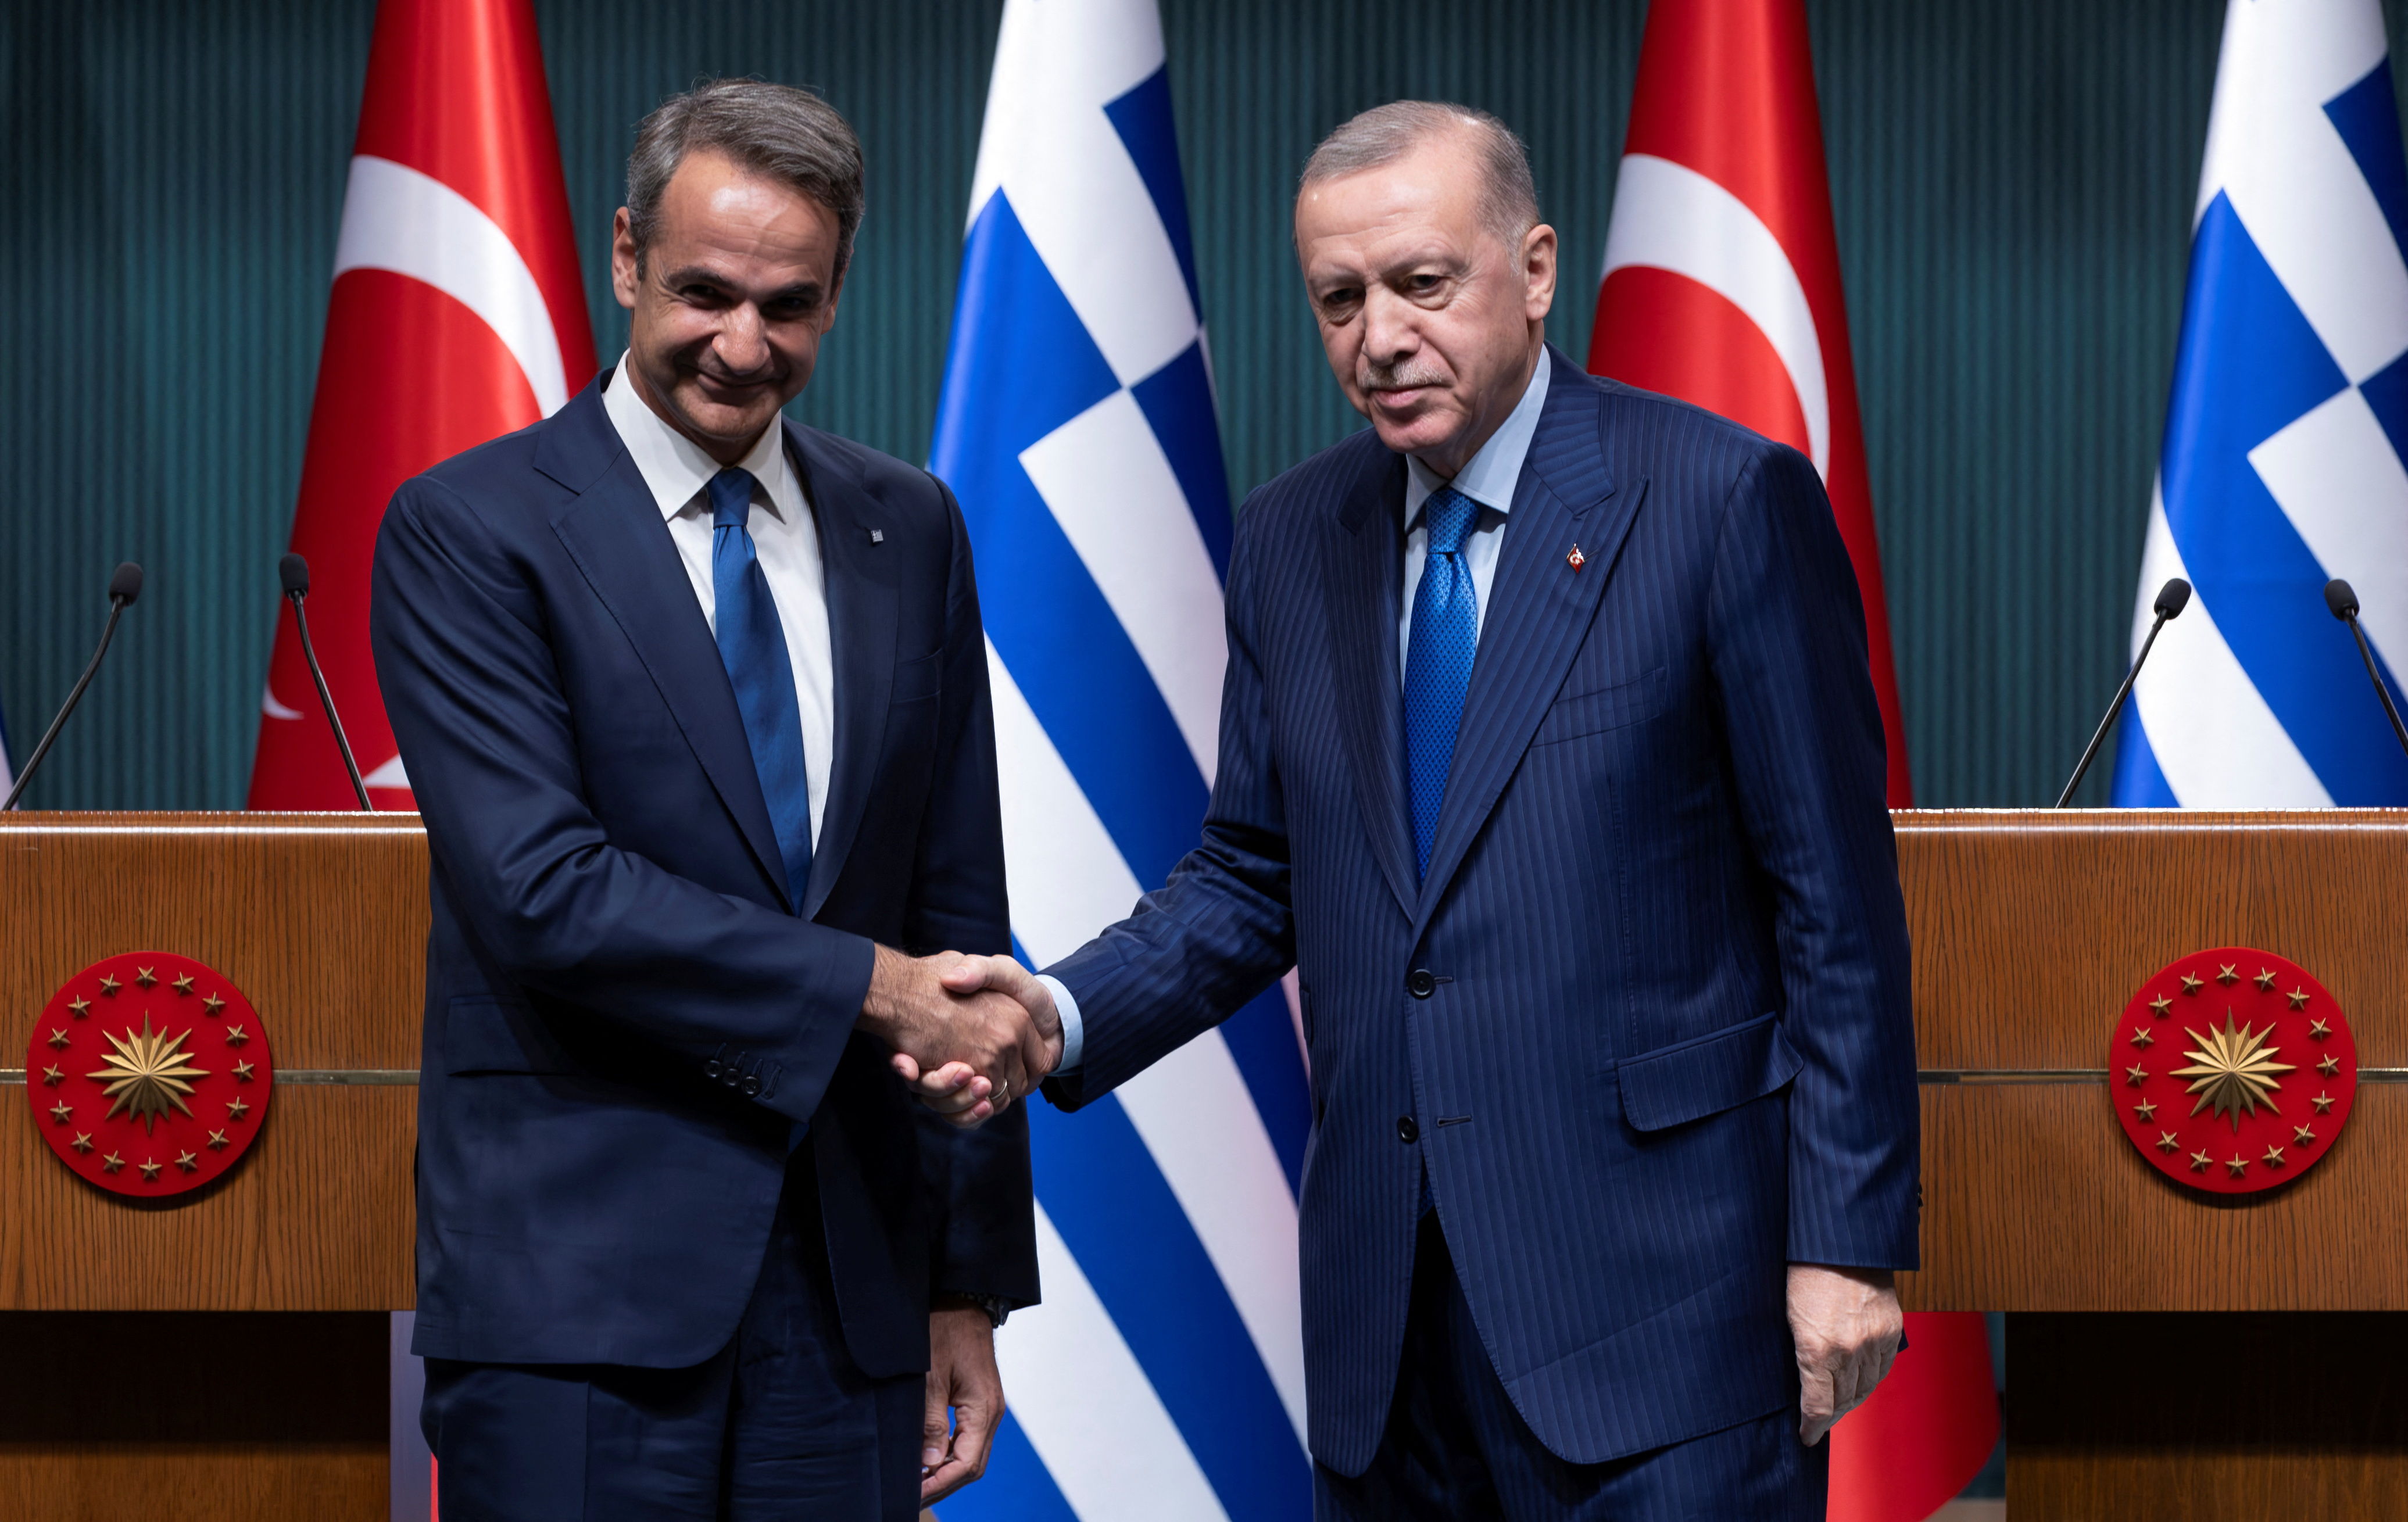 Turkey's President Tayyip Erdogan and Greek Prime Minister Kyriakos Mitsotakis attend a press conference in Ankara